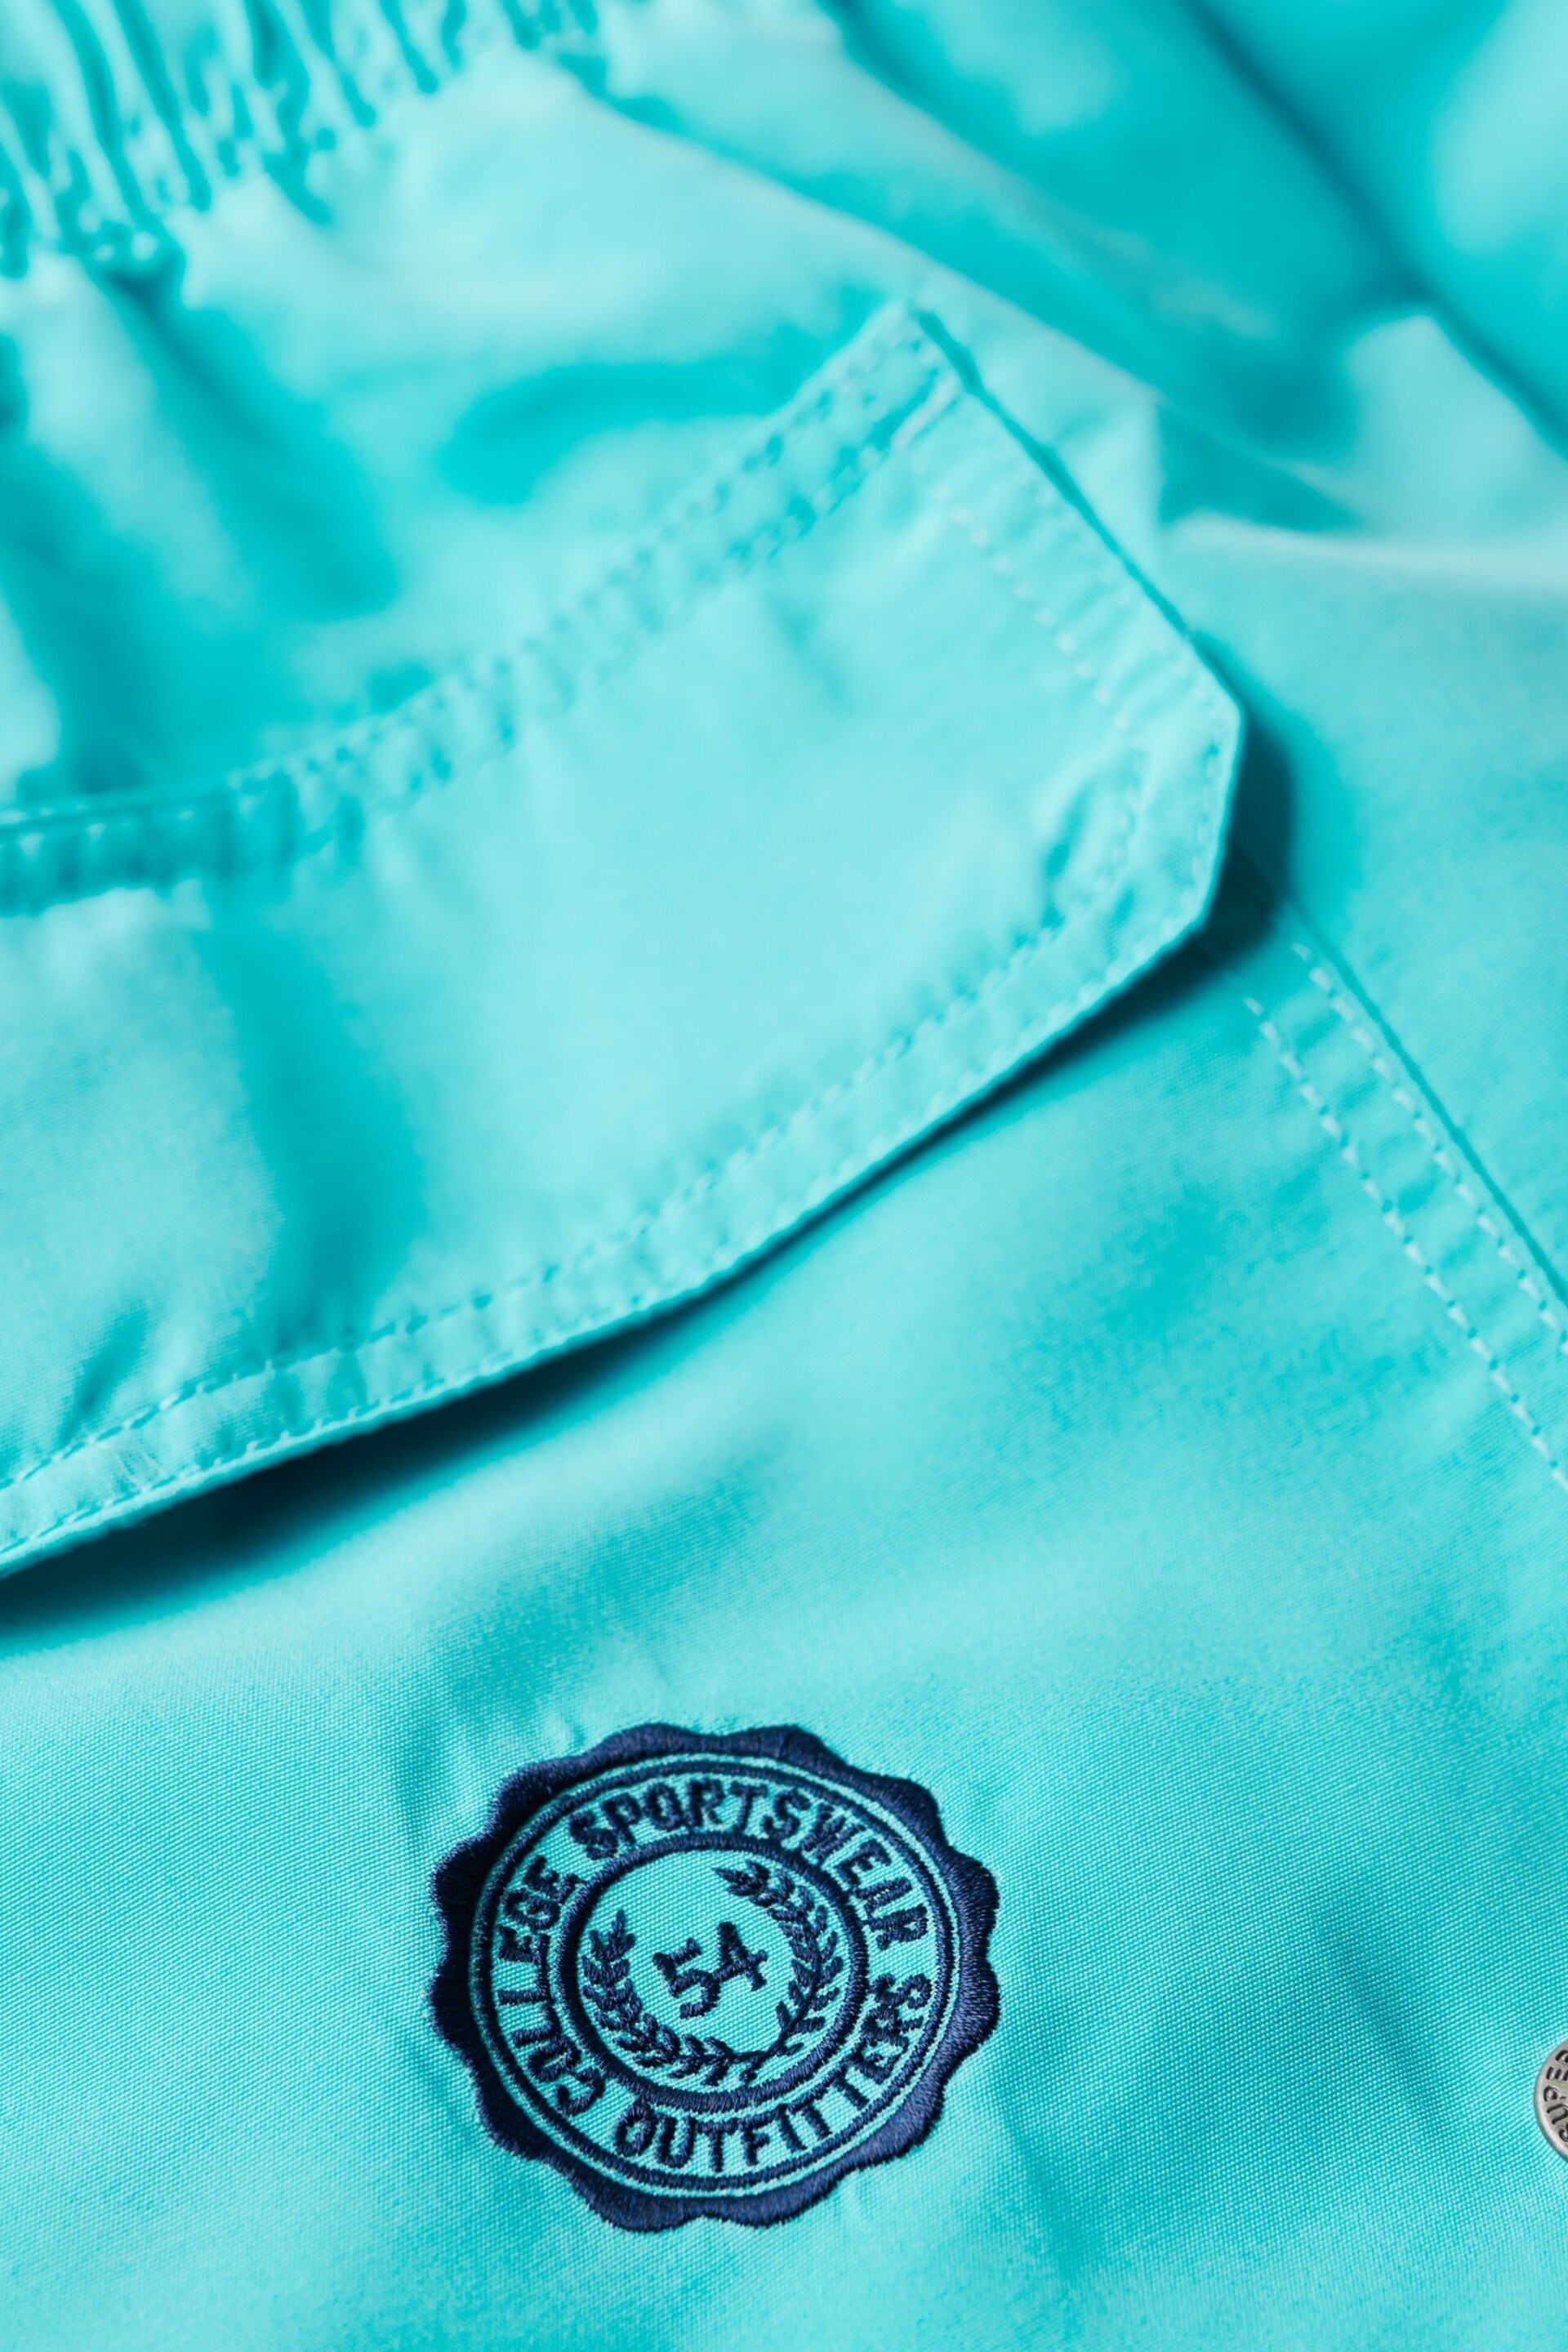 Superdry Light Blue Vintage Polo Shirt 17" Swim Shorts - Image 6 of 7